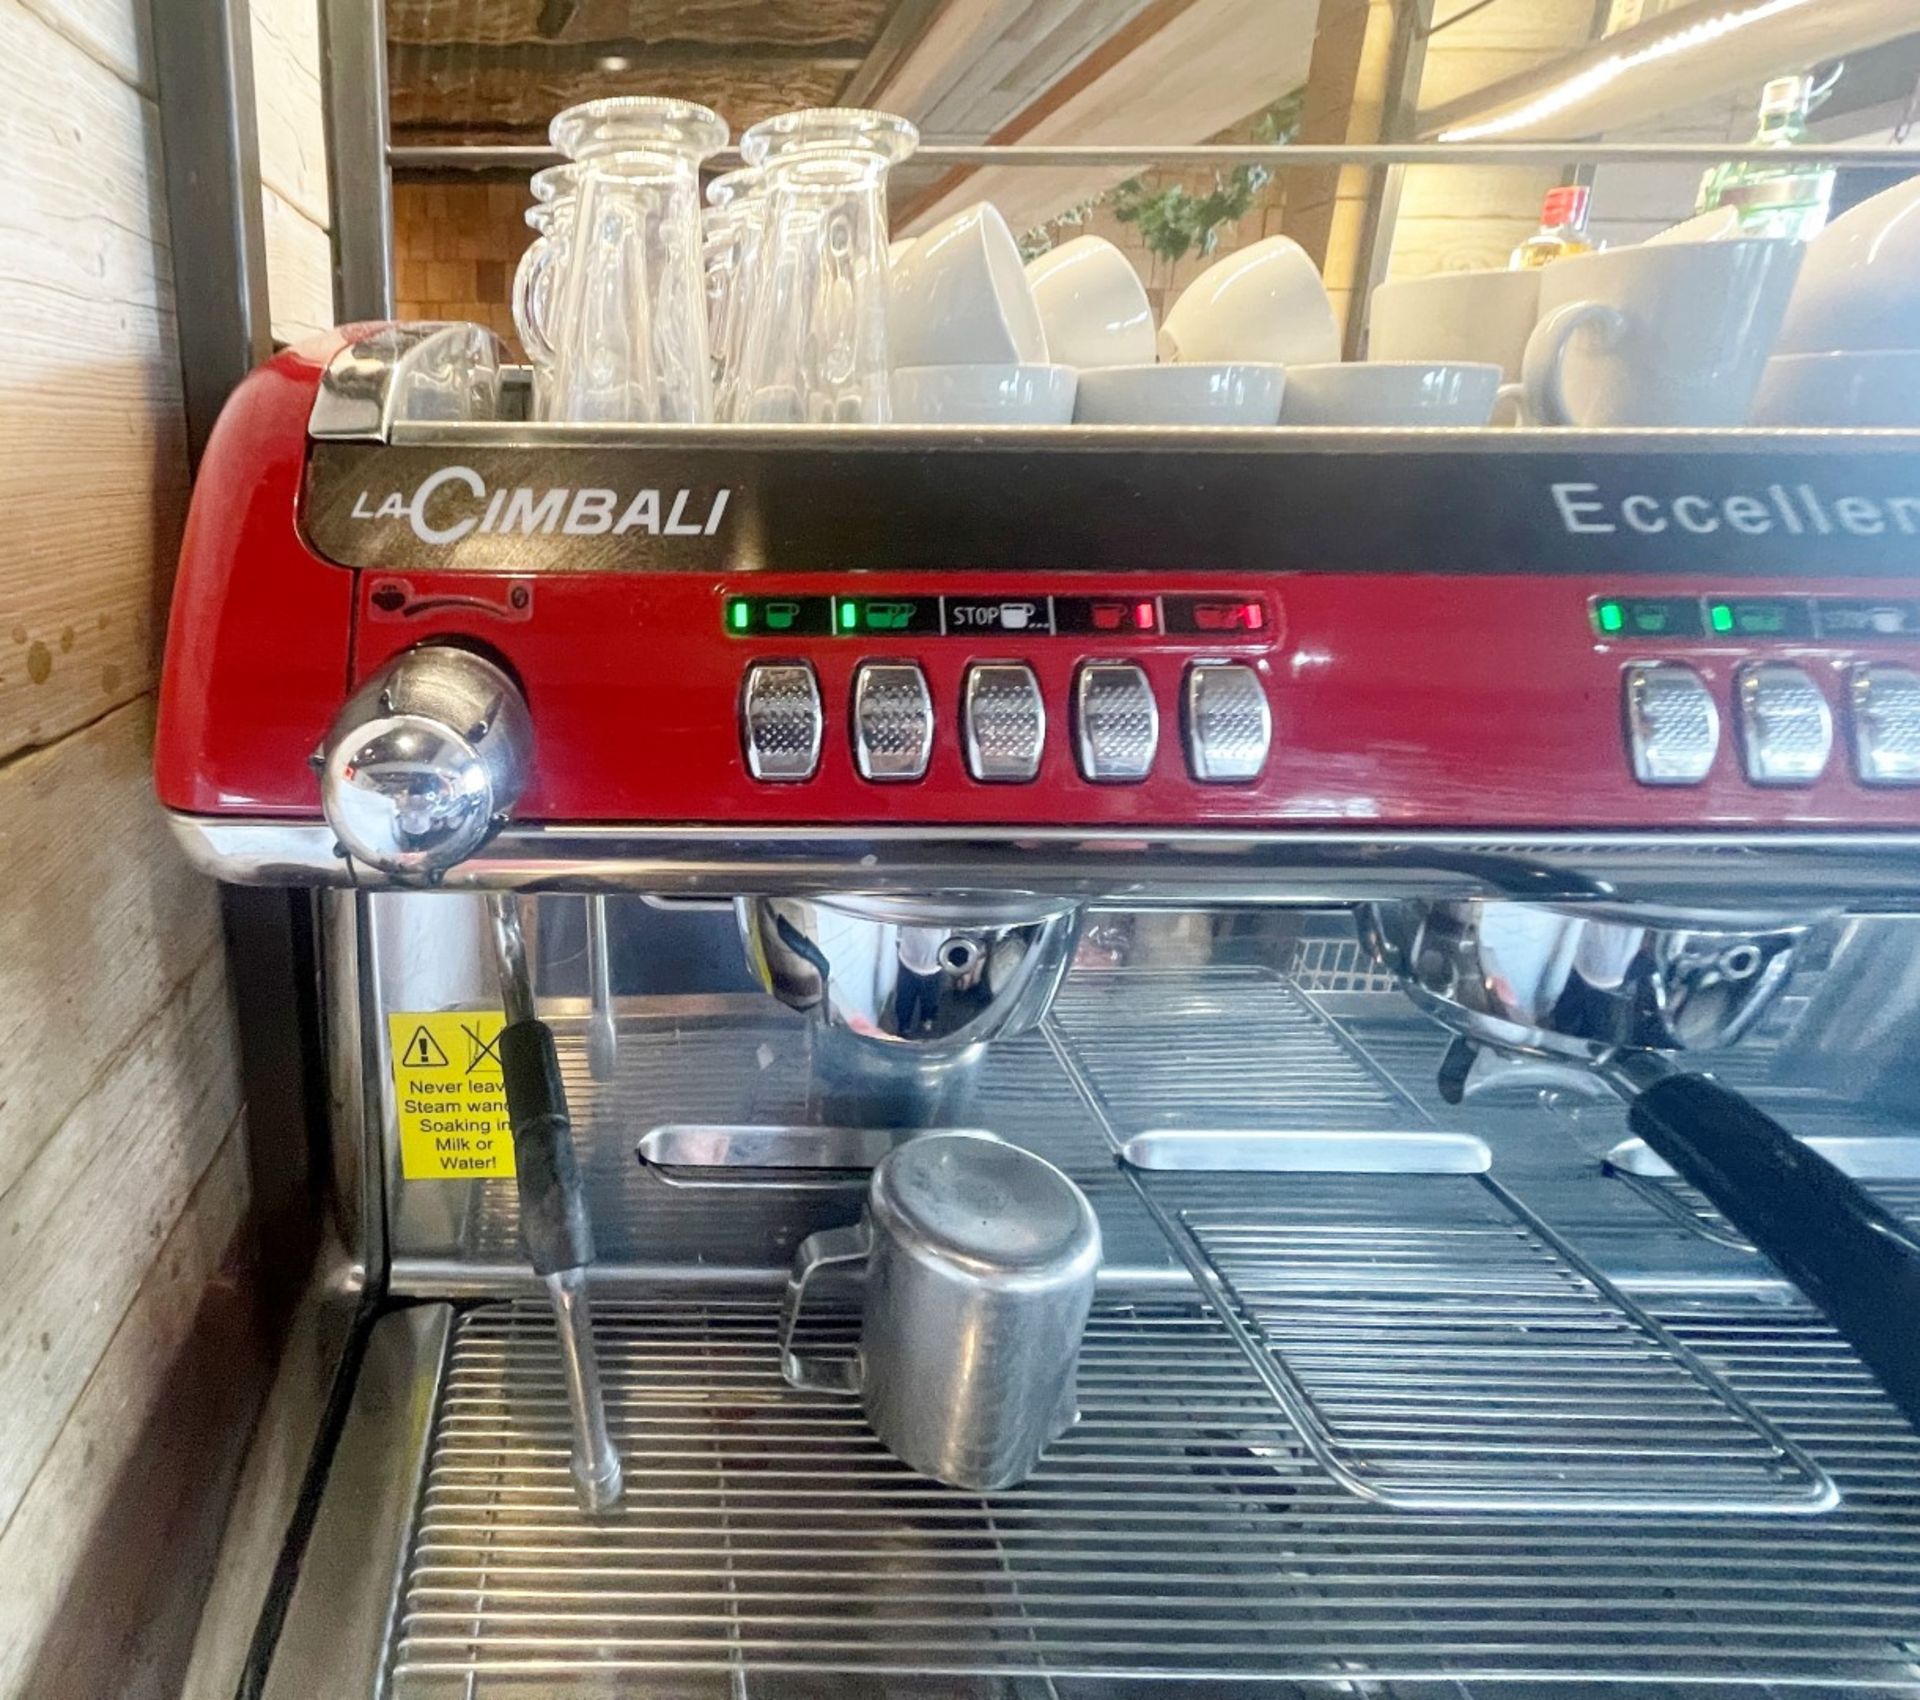 1 x La Cimbali M39 Dosatron 3 Group Automatic Commercial Espresso Coffee Machine in Vibrant Red - Image 8 of 9